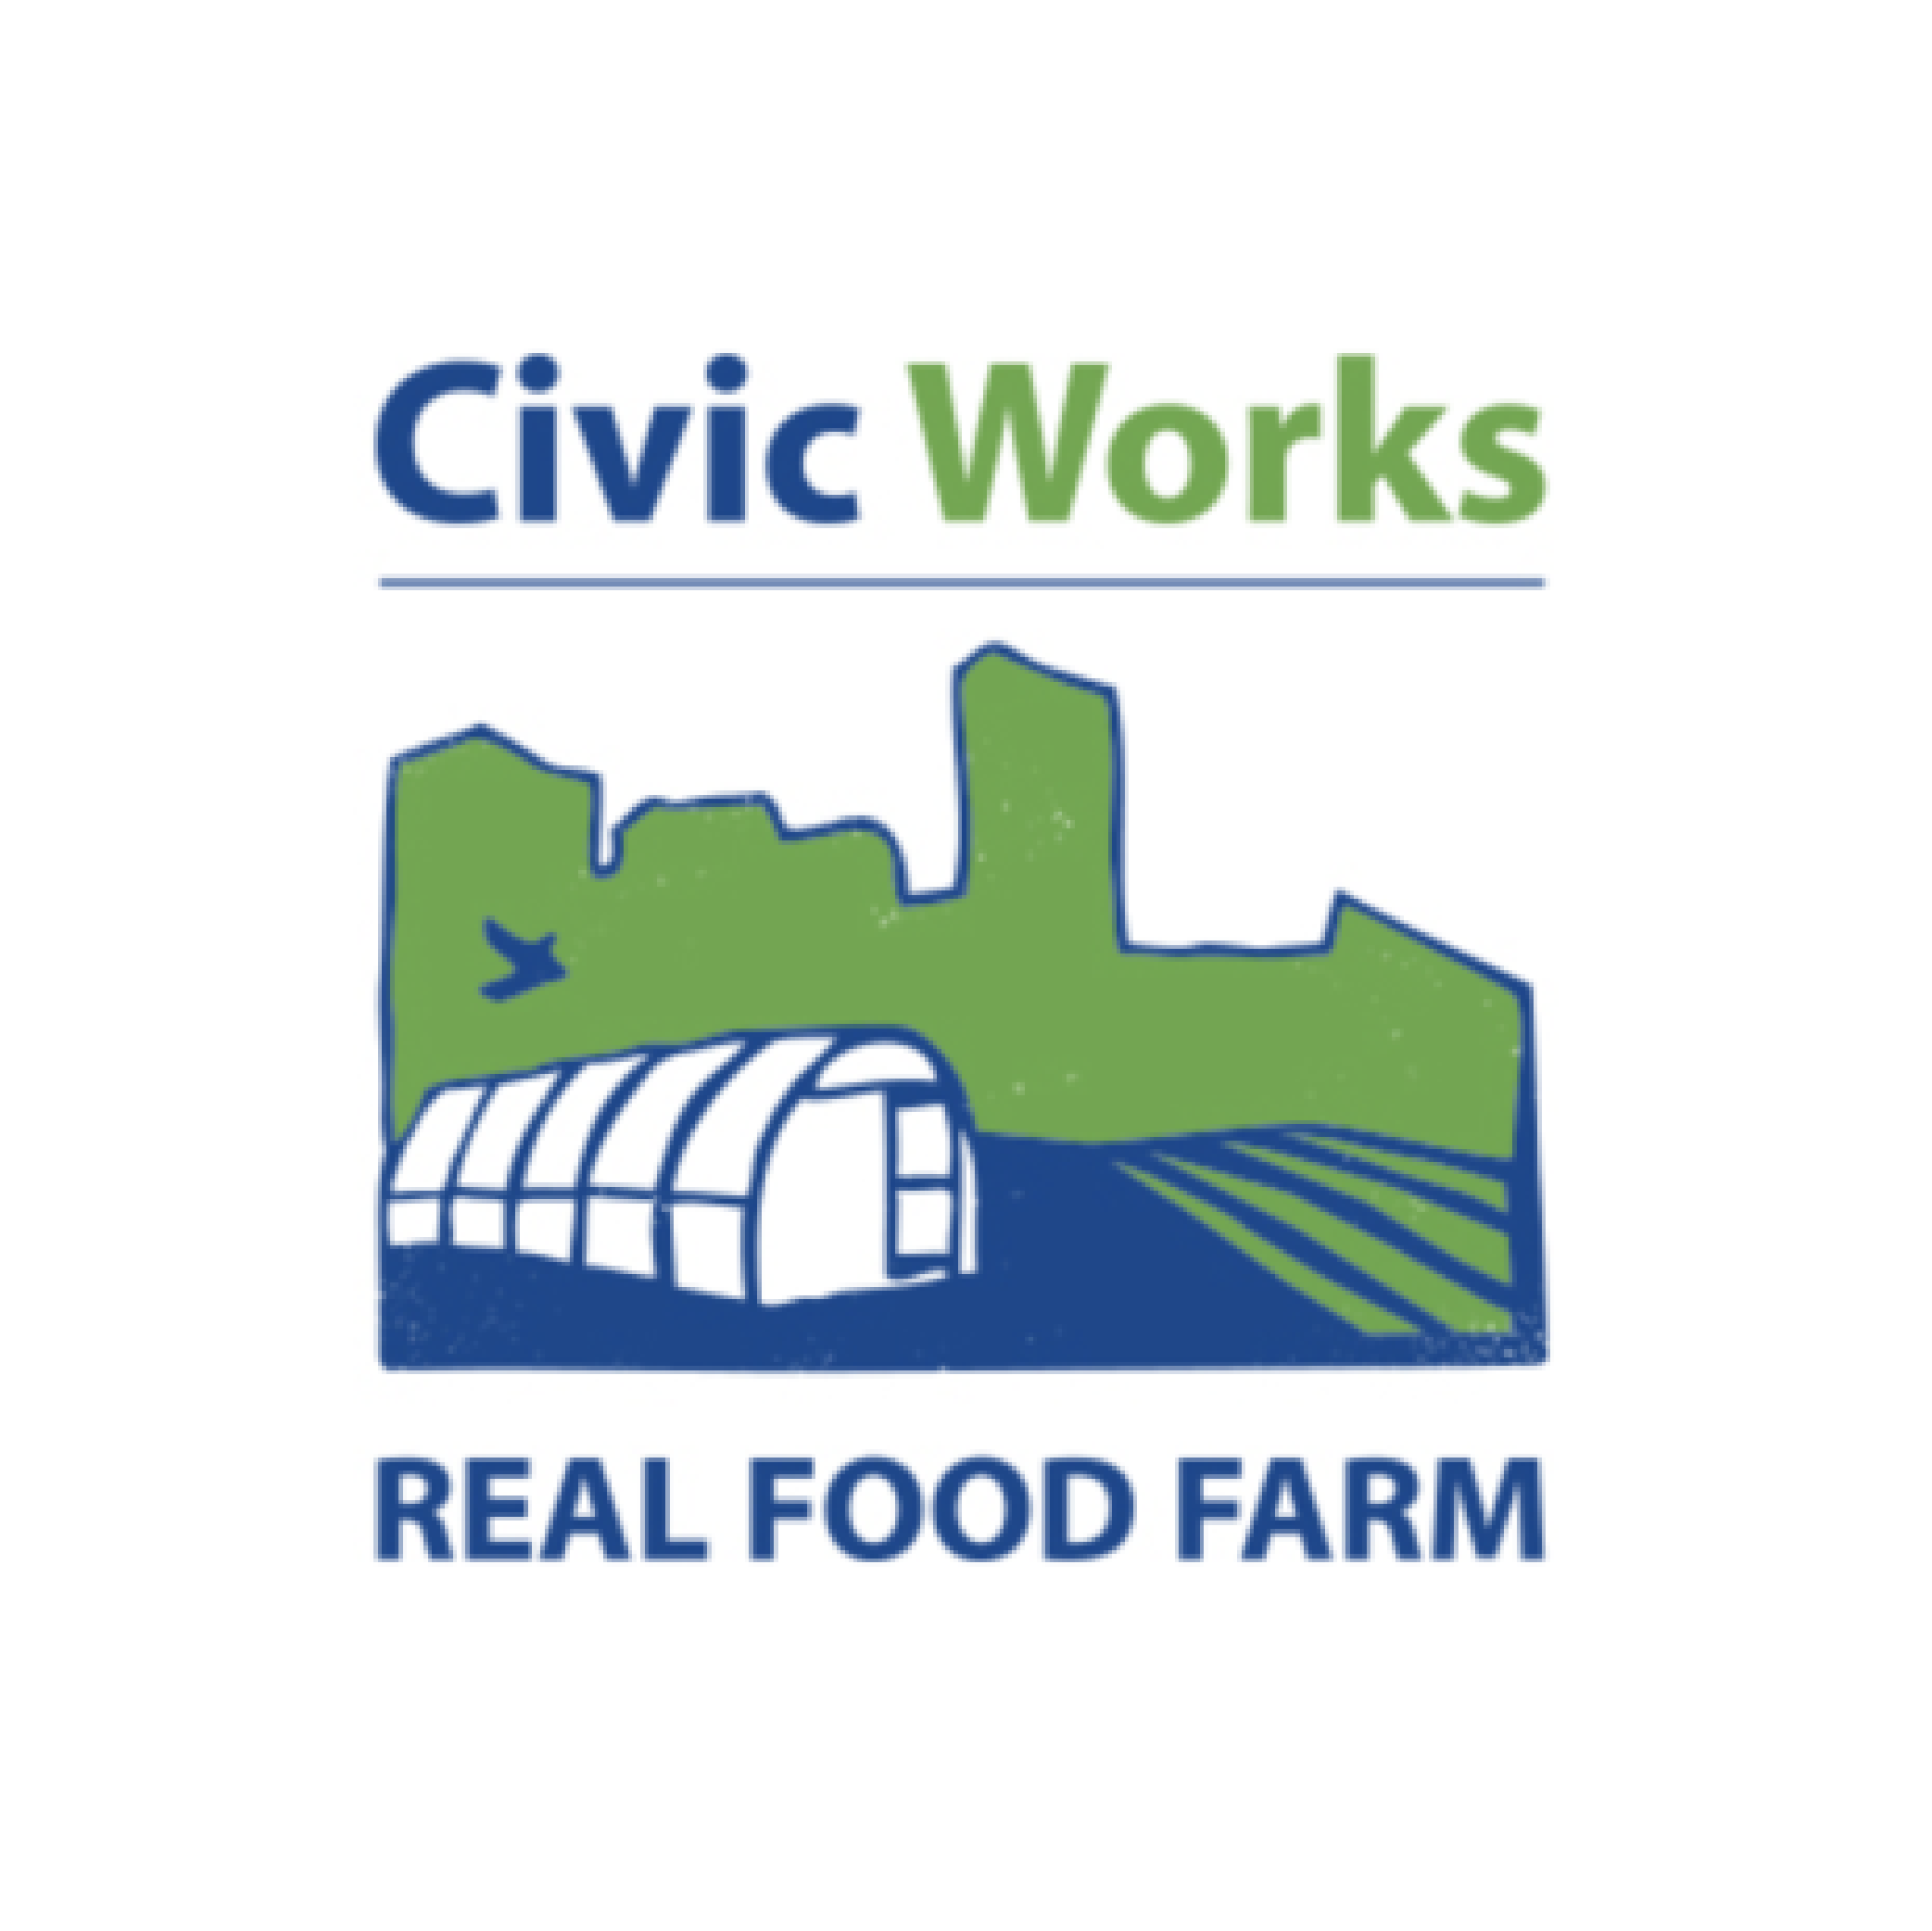 Civic Works Real Food Farm